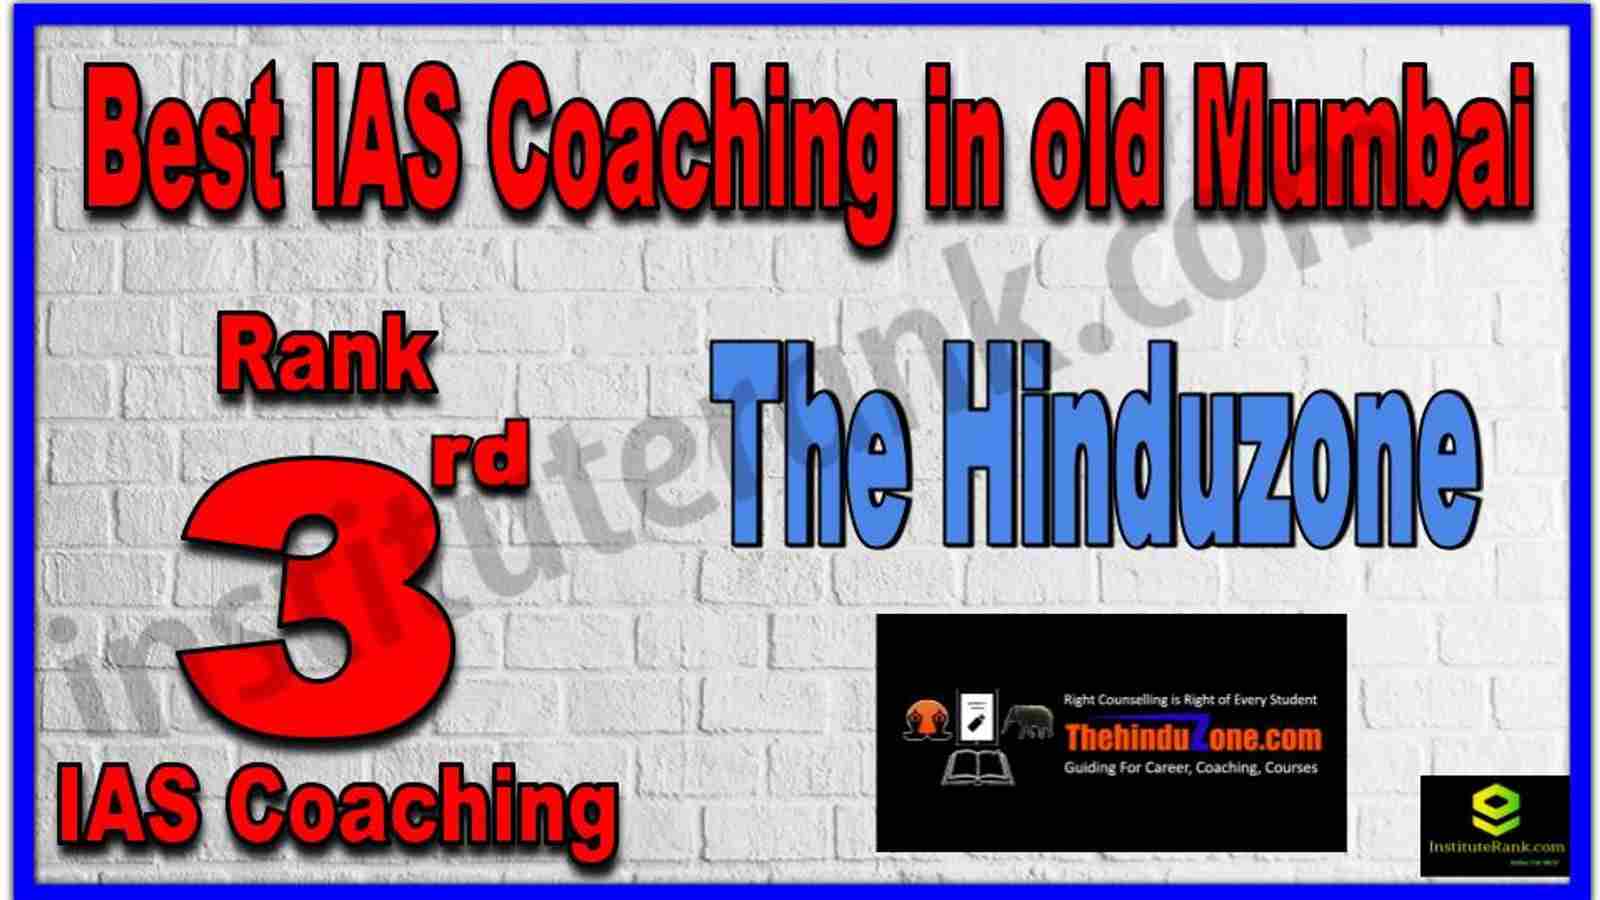 Rank 3rd Best IAS Coaching in old Mumbai